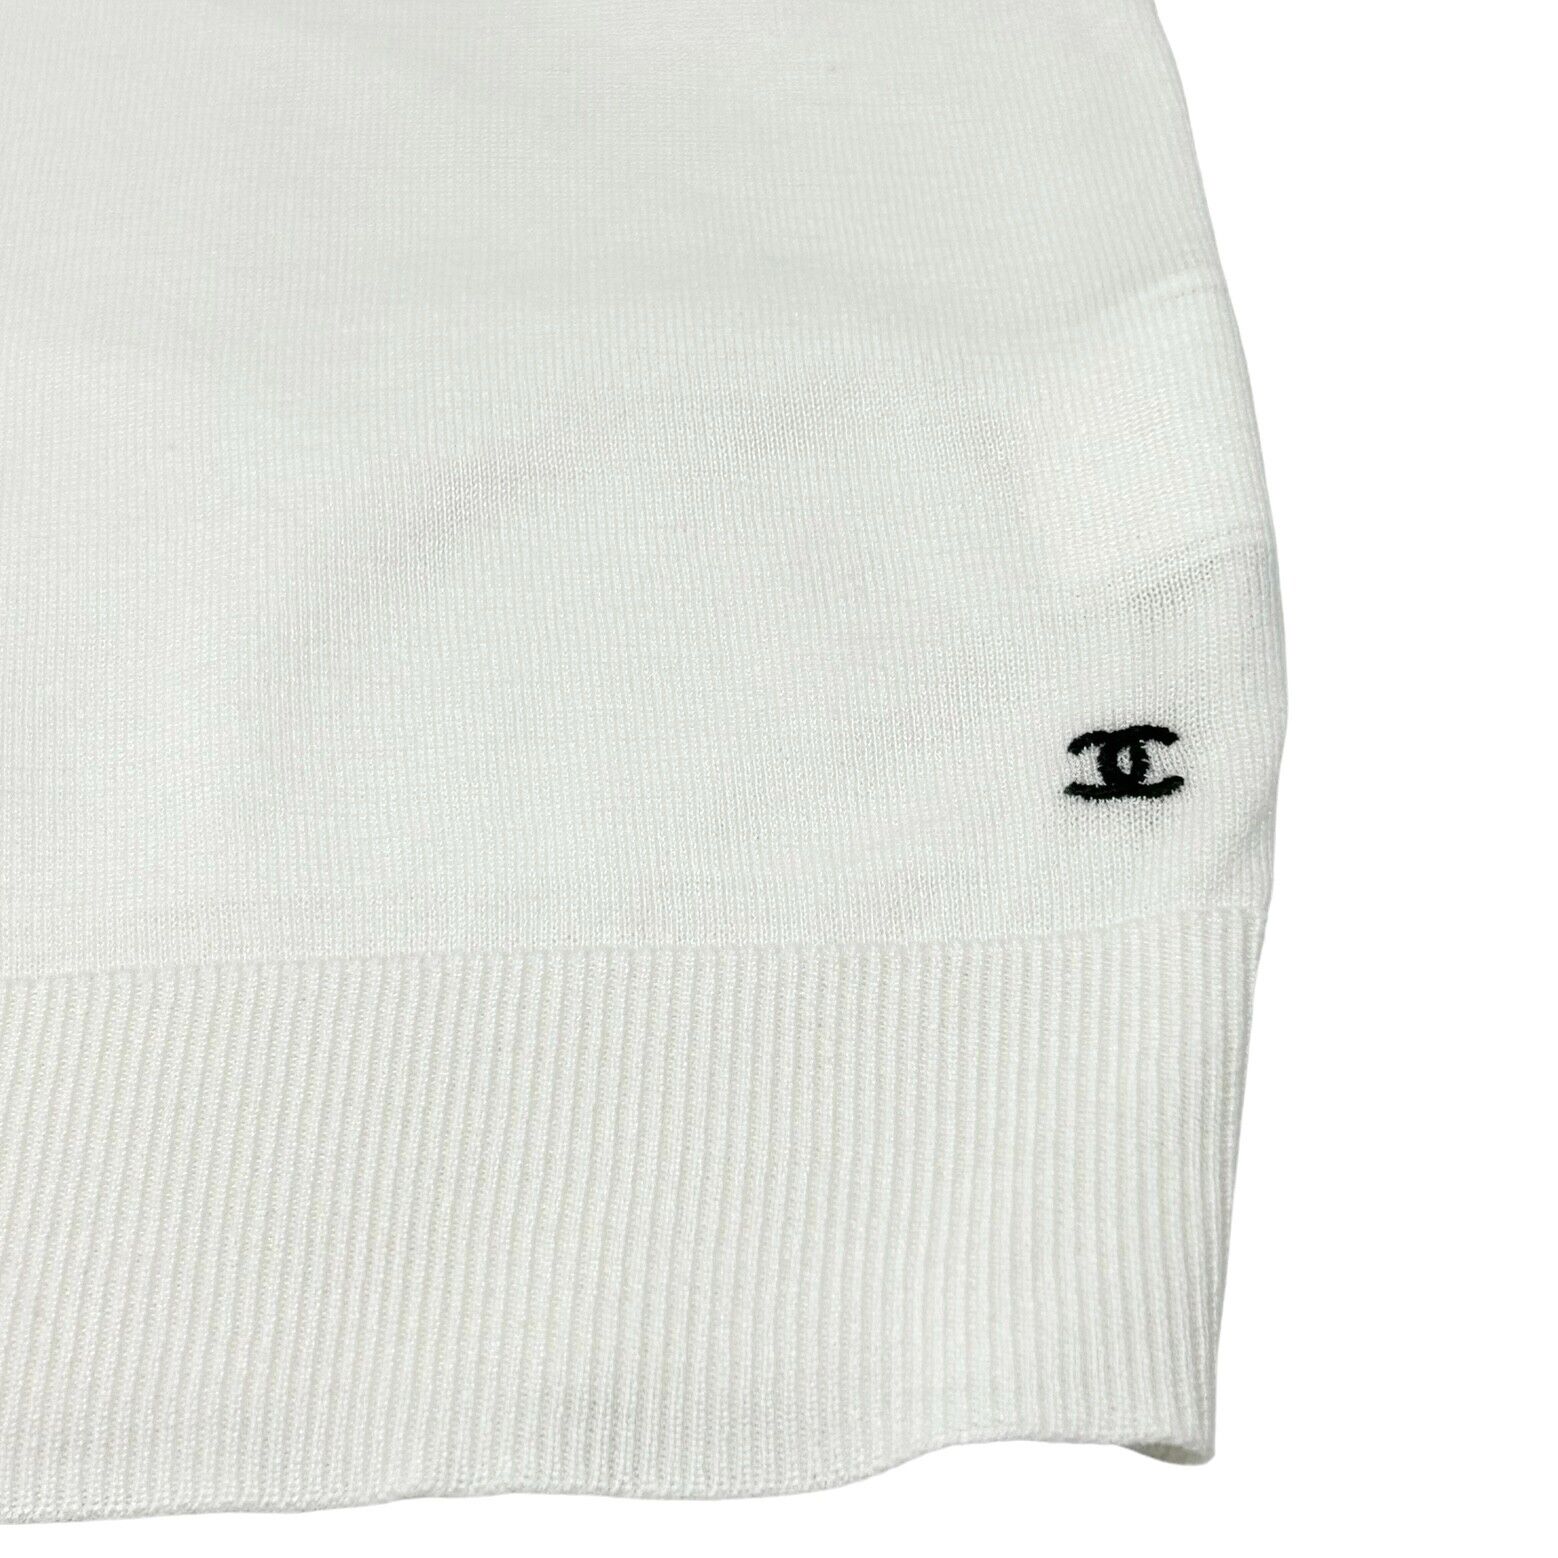 CHANEL Vintage Coco Mark Logo Sleeveless Top #44 Summer Knit White Cotton RankAB